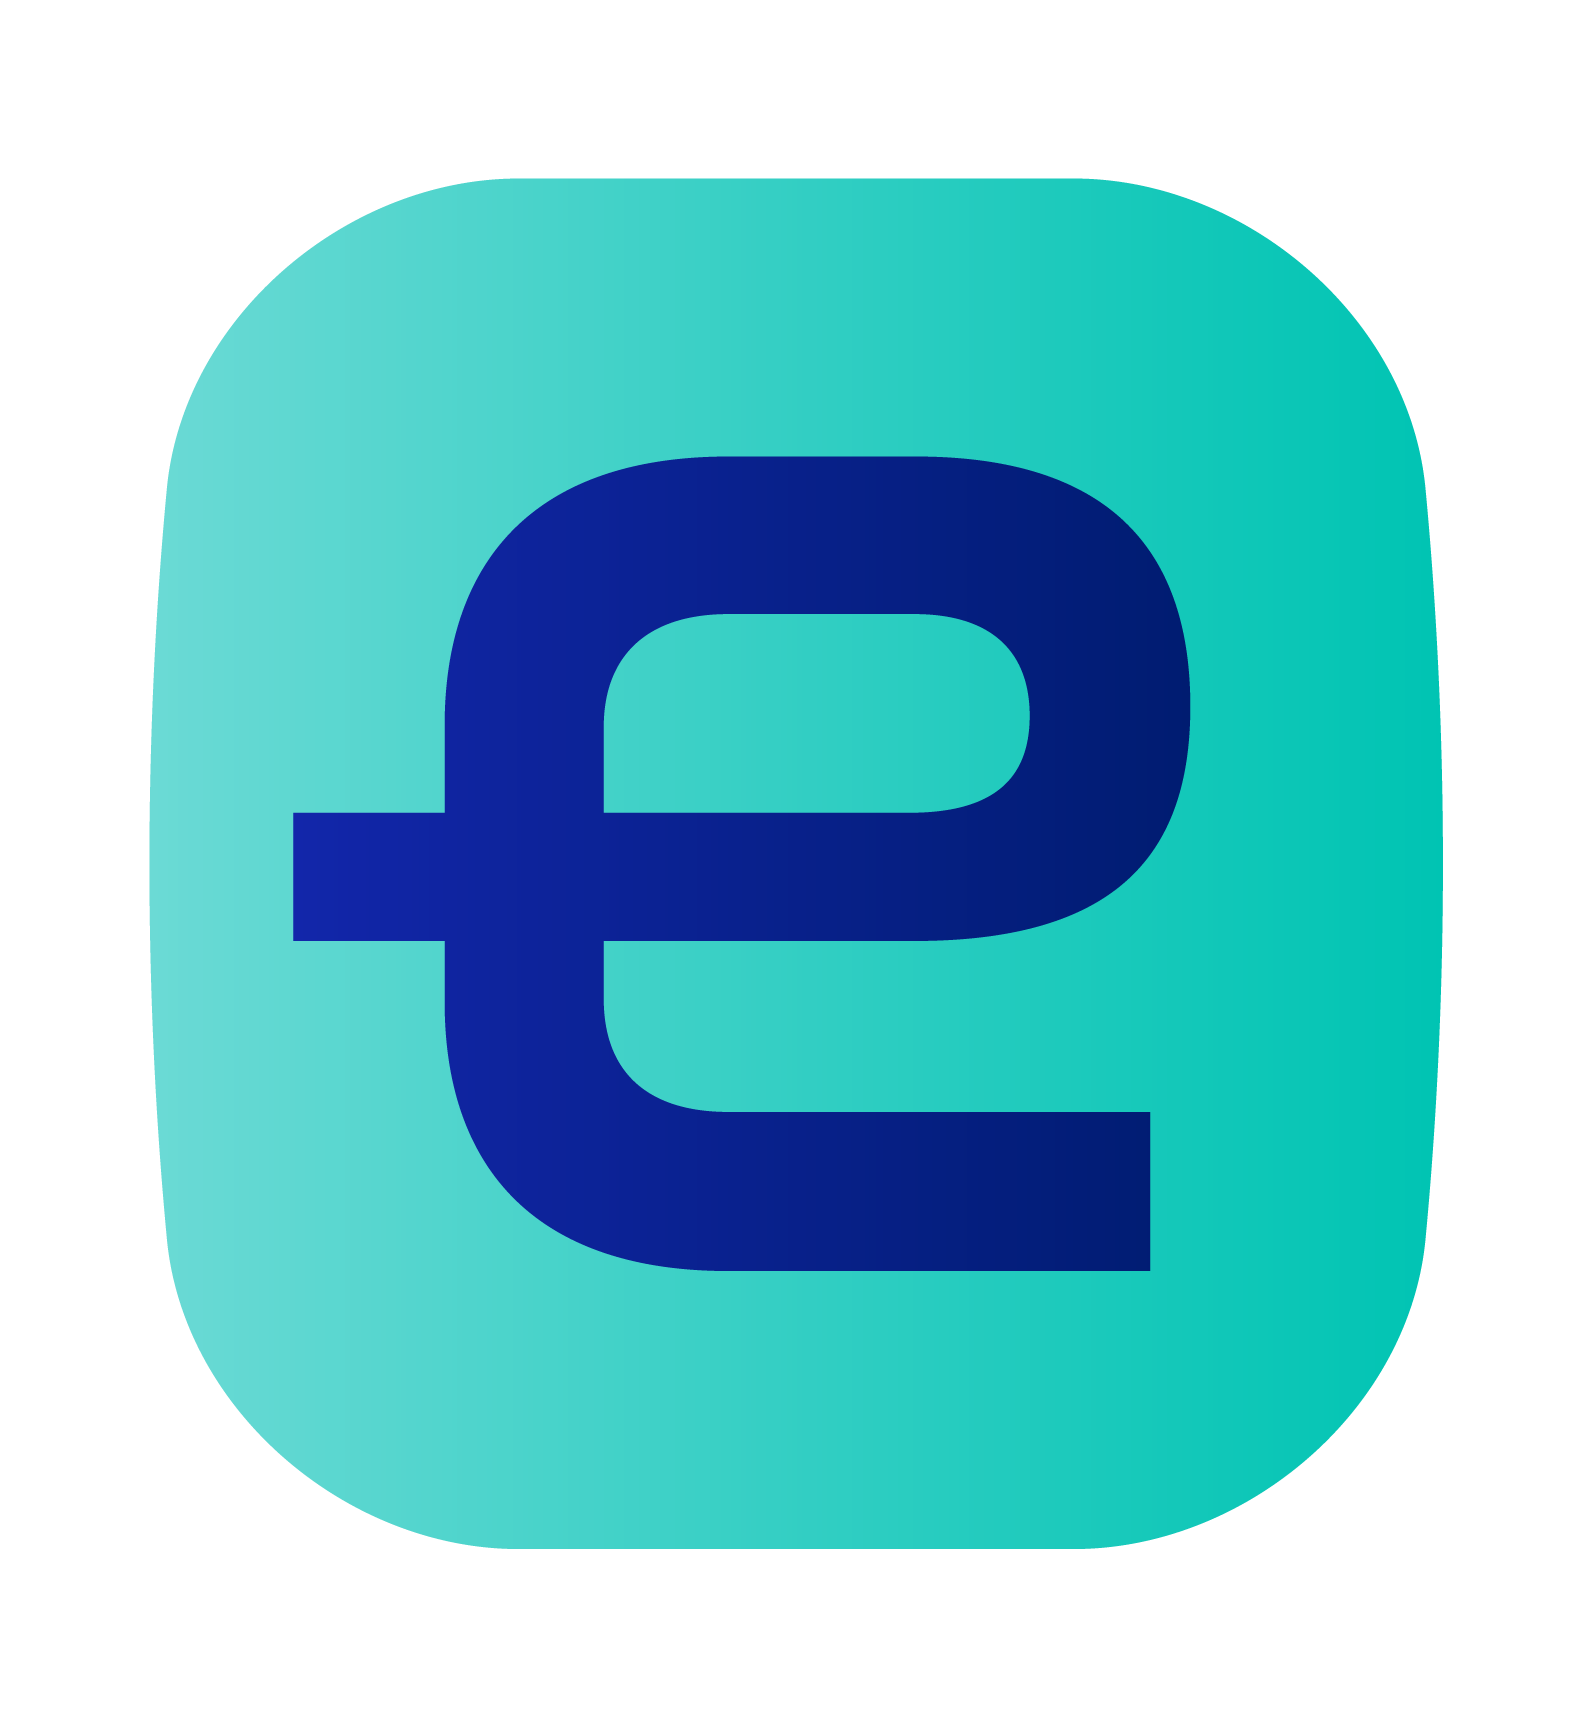 Logo eFact